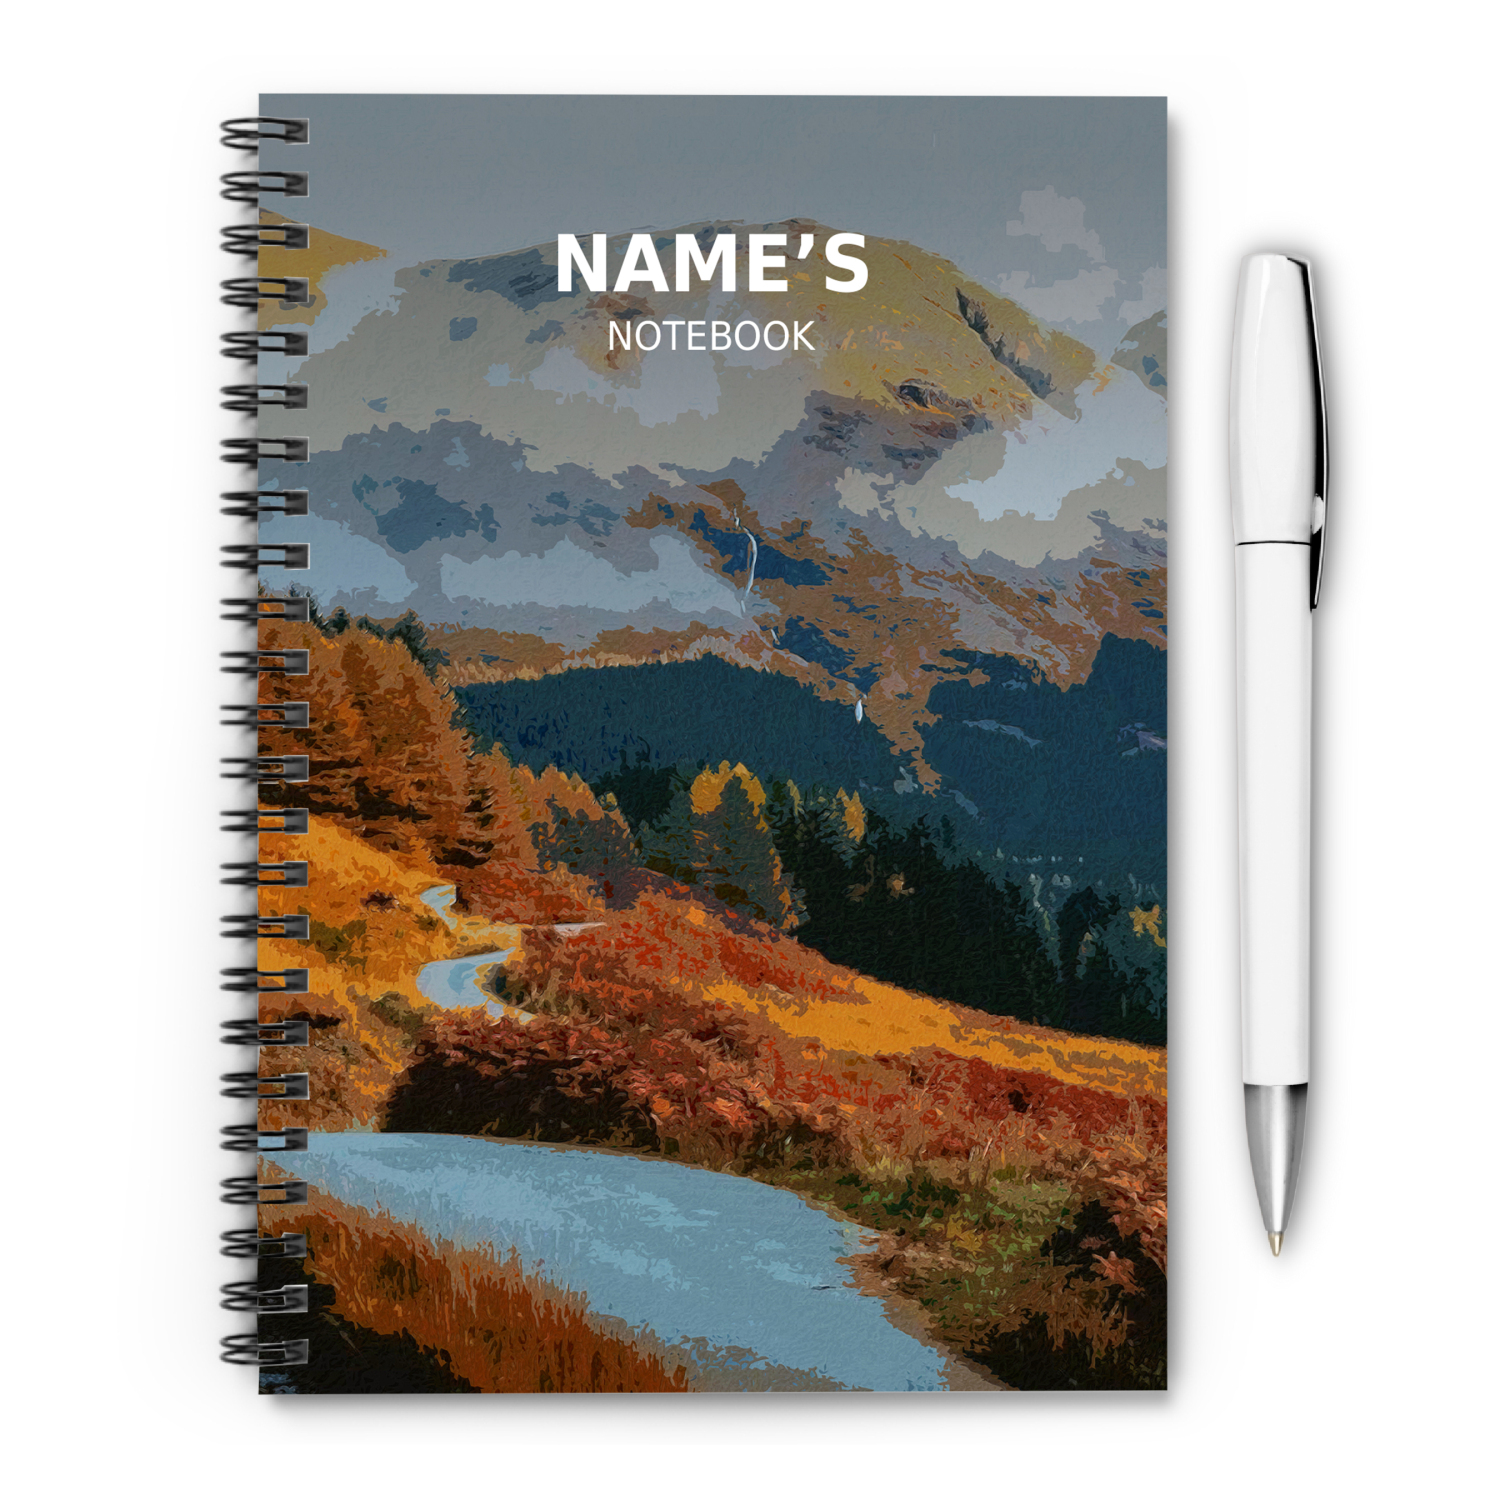 Glen Etive - Scotland - A5 Notebook - Single Note Book